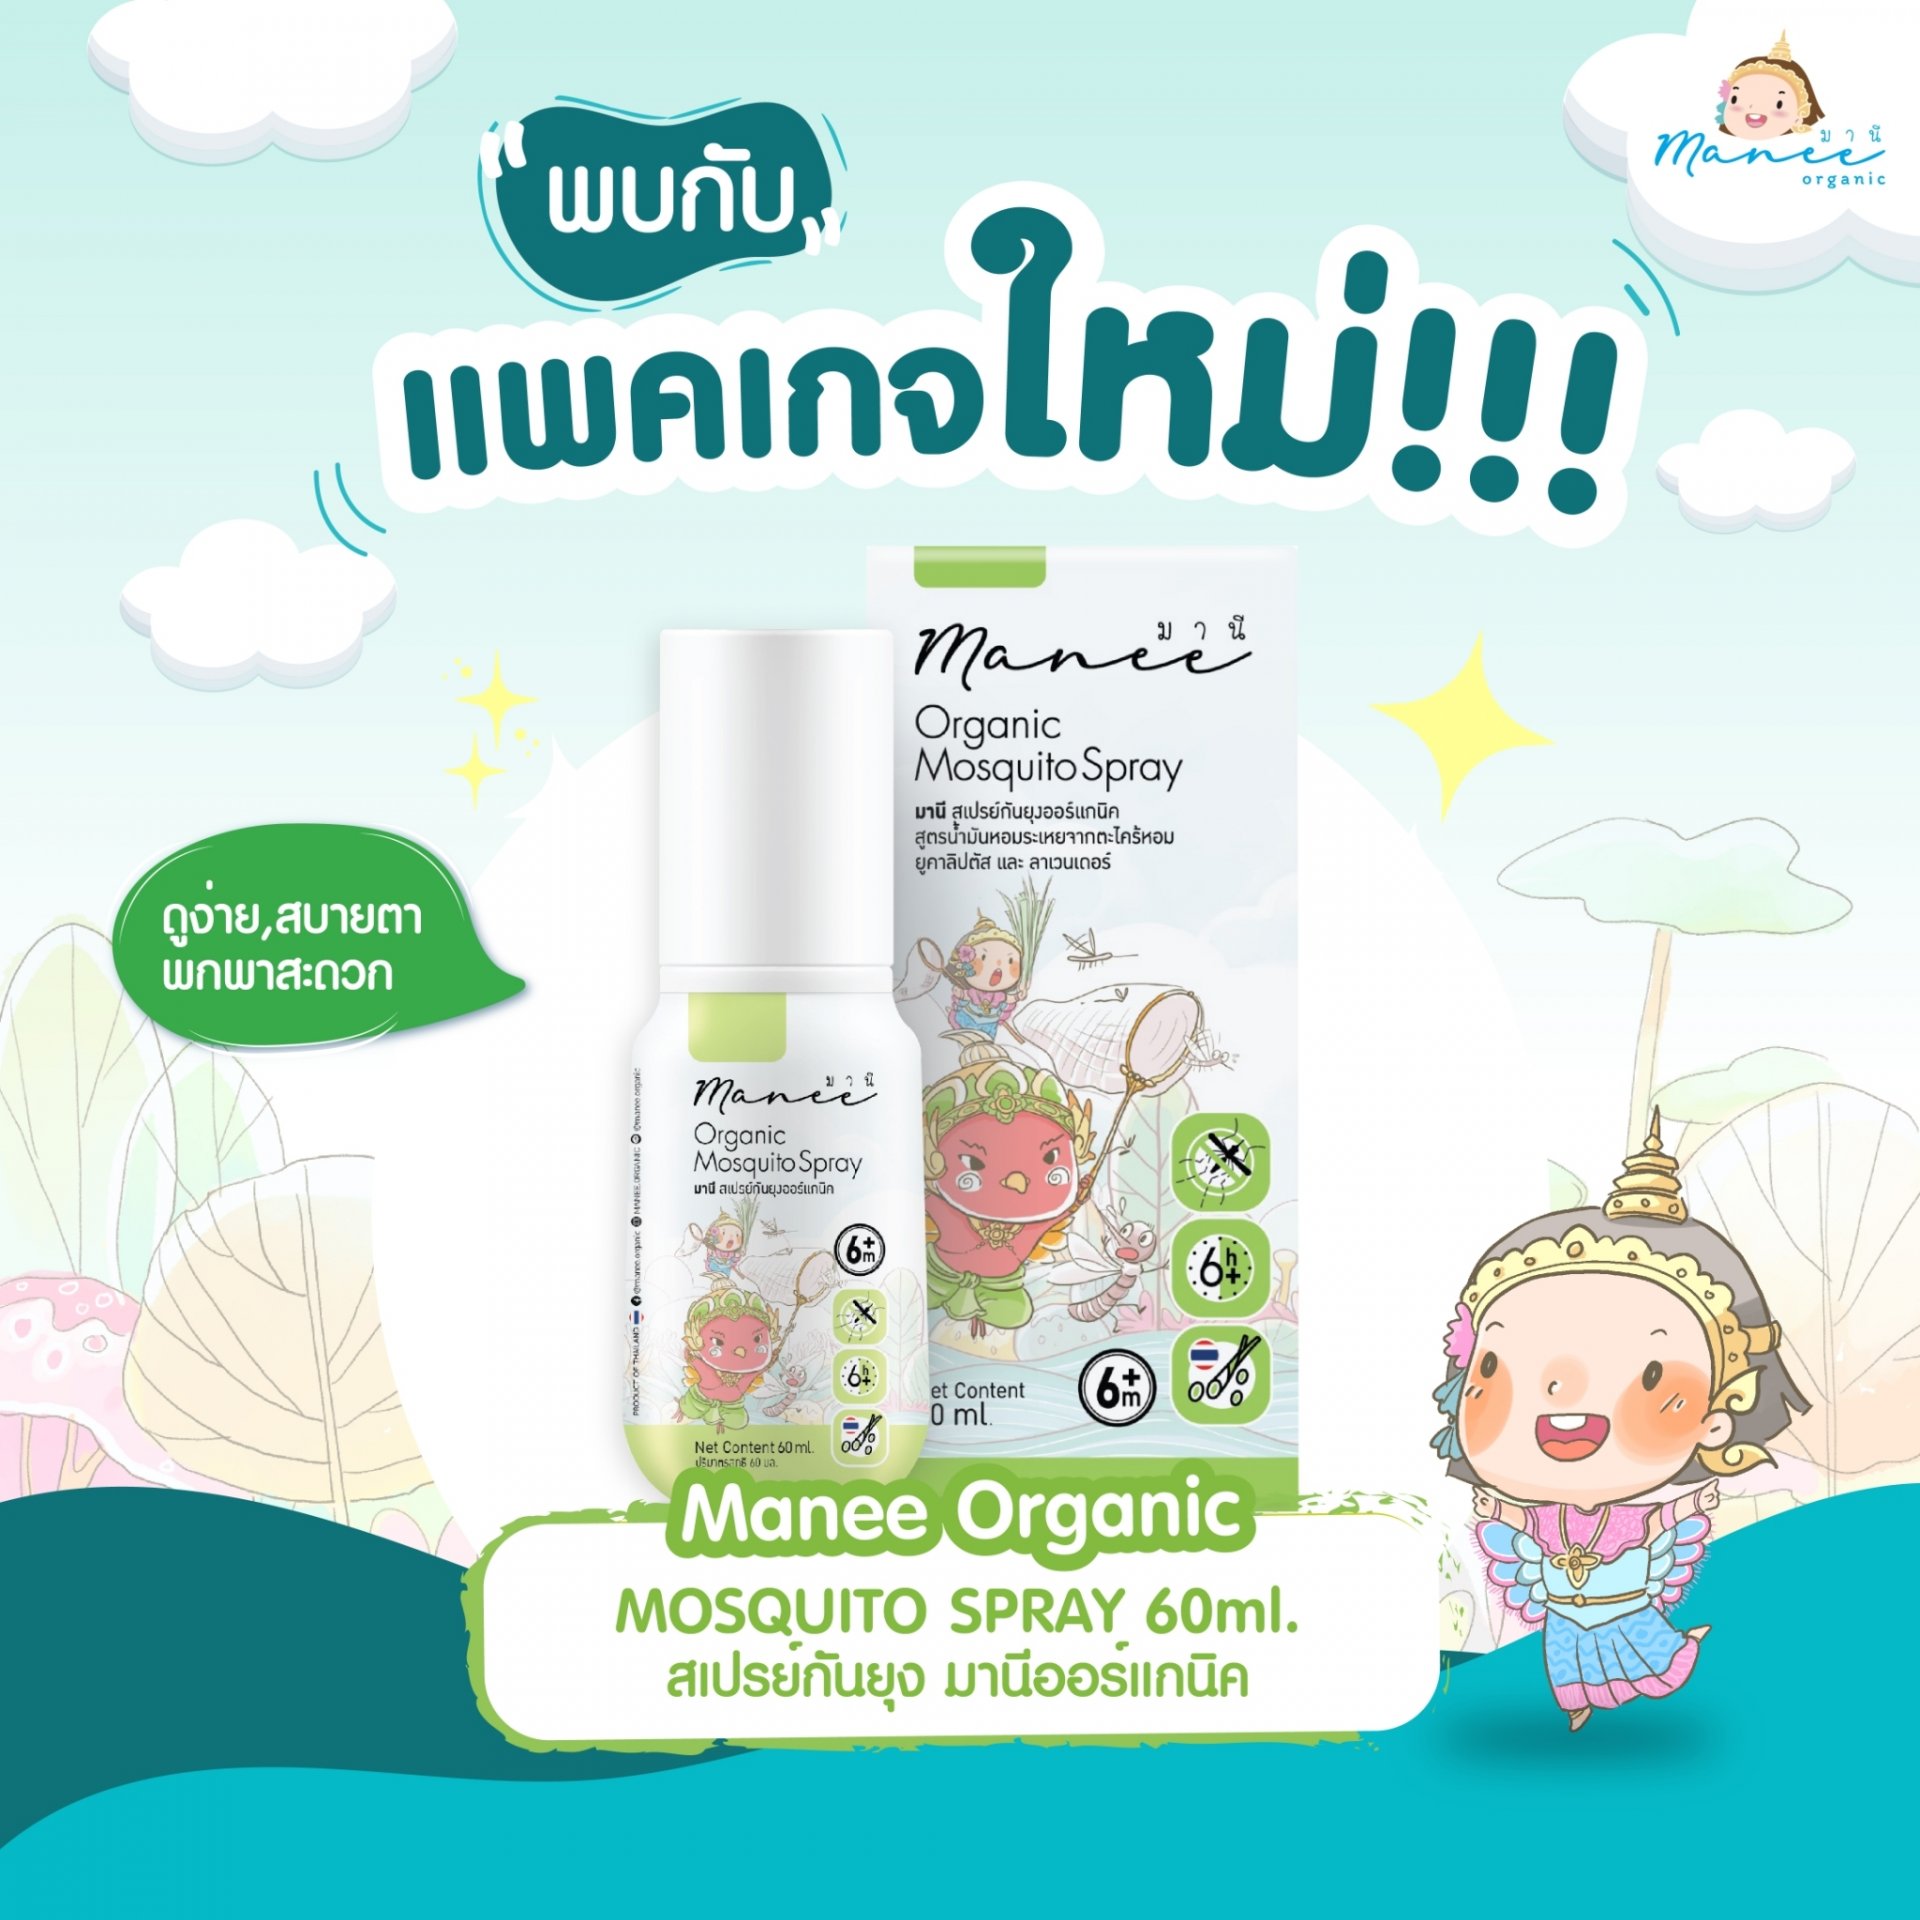 Manee Organic Mosquito Spray มานี สเปรย์กันยุง ออร์แกนิค อ่อนโยนสำหรับเด็กและผิวแพ้ง่าย